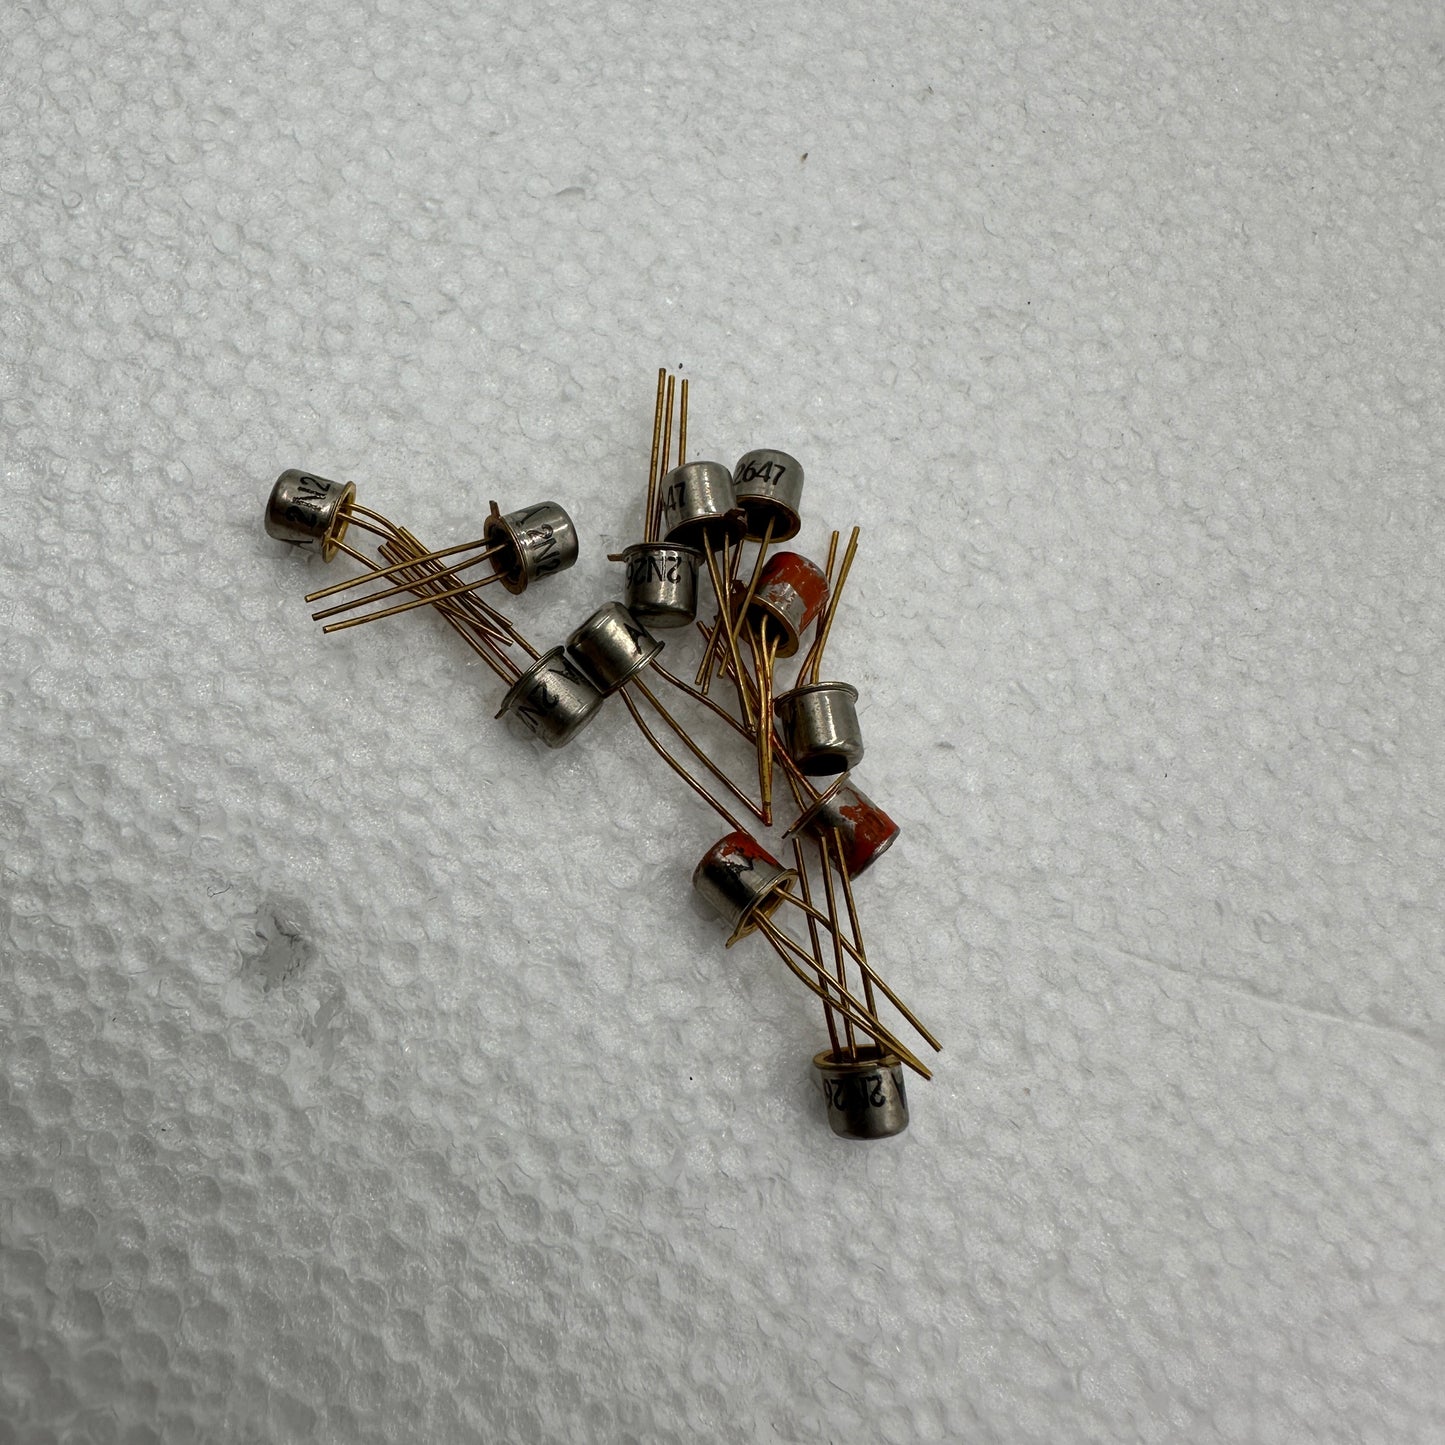 2N2647 Silicon PN Unijunction Transistor Motorola Gold Leads TO-18